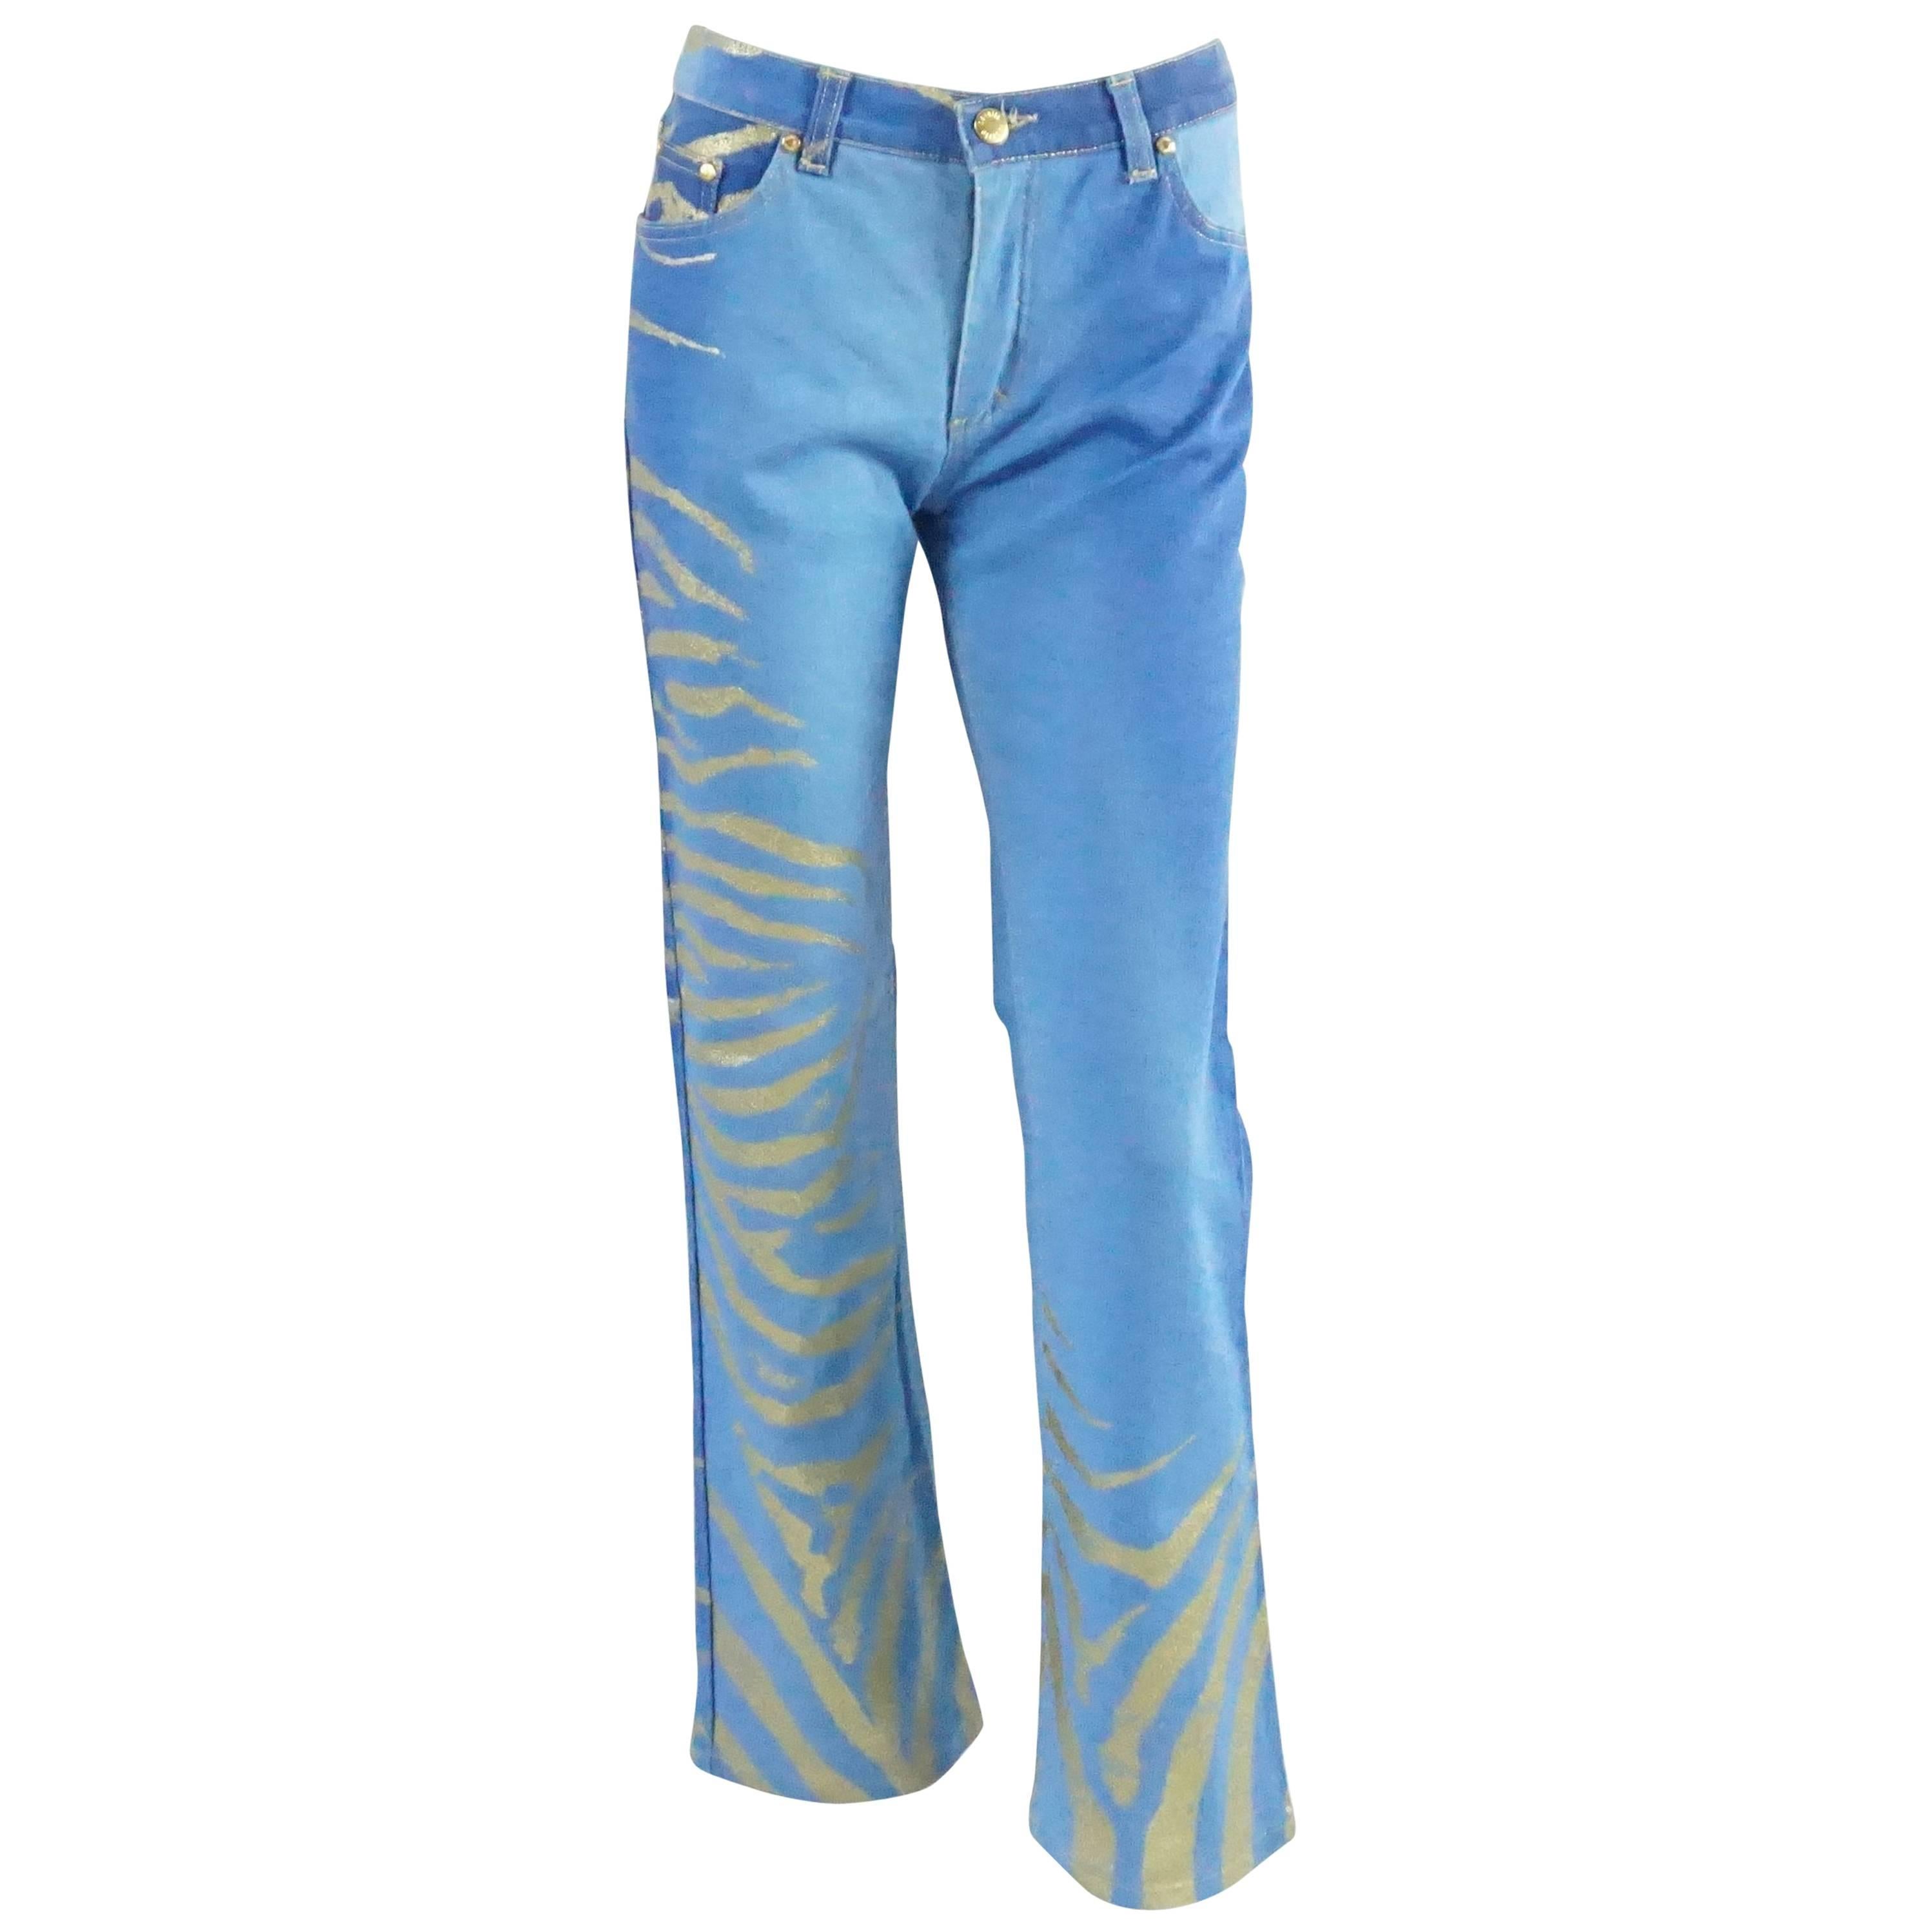 Roberto Cavalli Blue Jeans with Gold Glitter Zebra Print, Size S